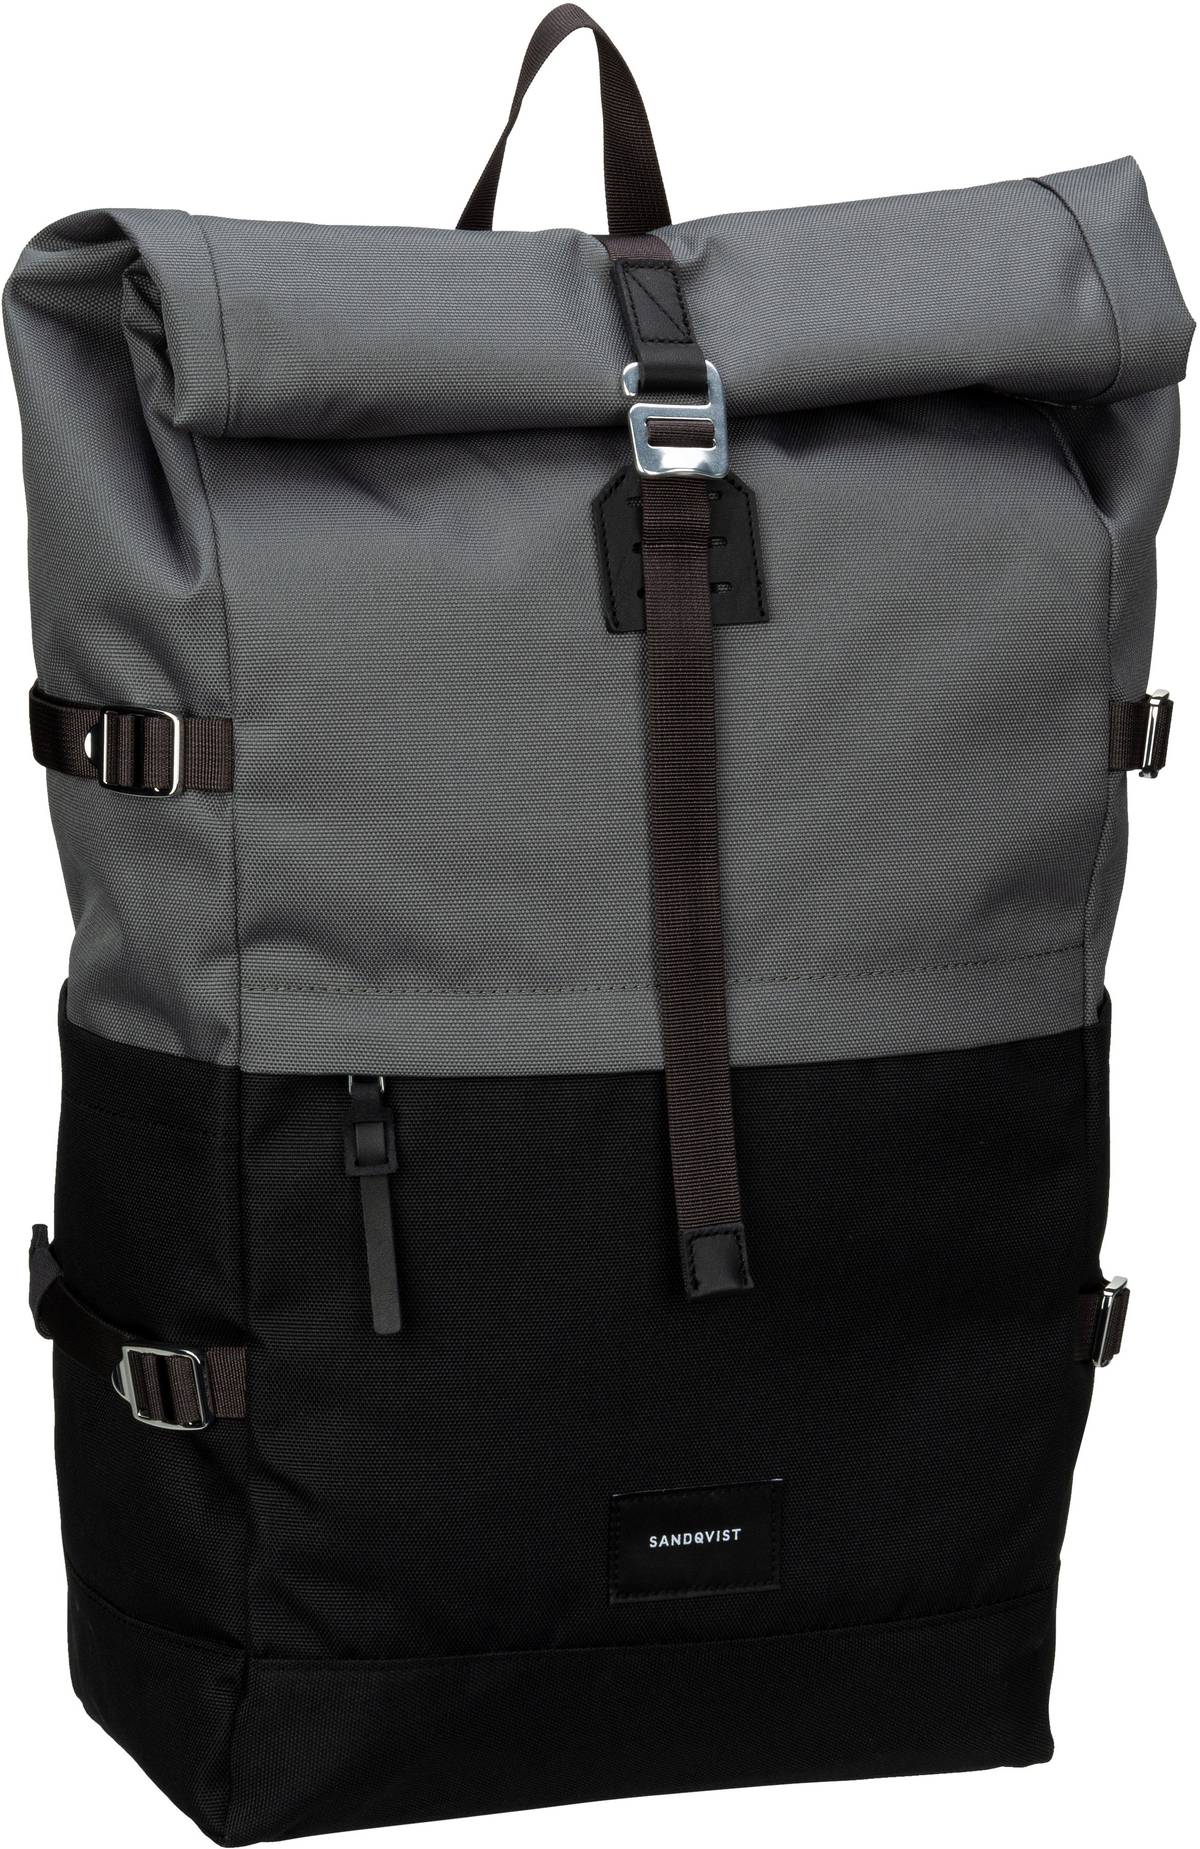 Sandqvist Bernt Rolltop Backpack - Multi Dark